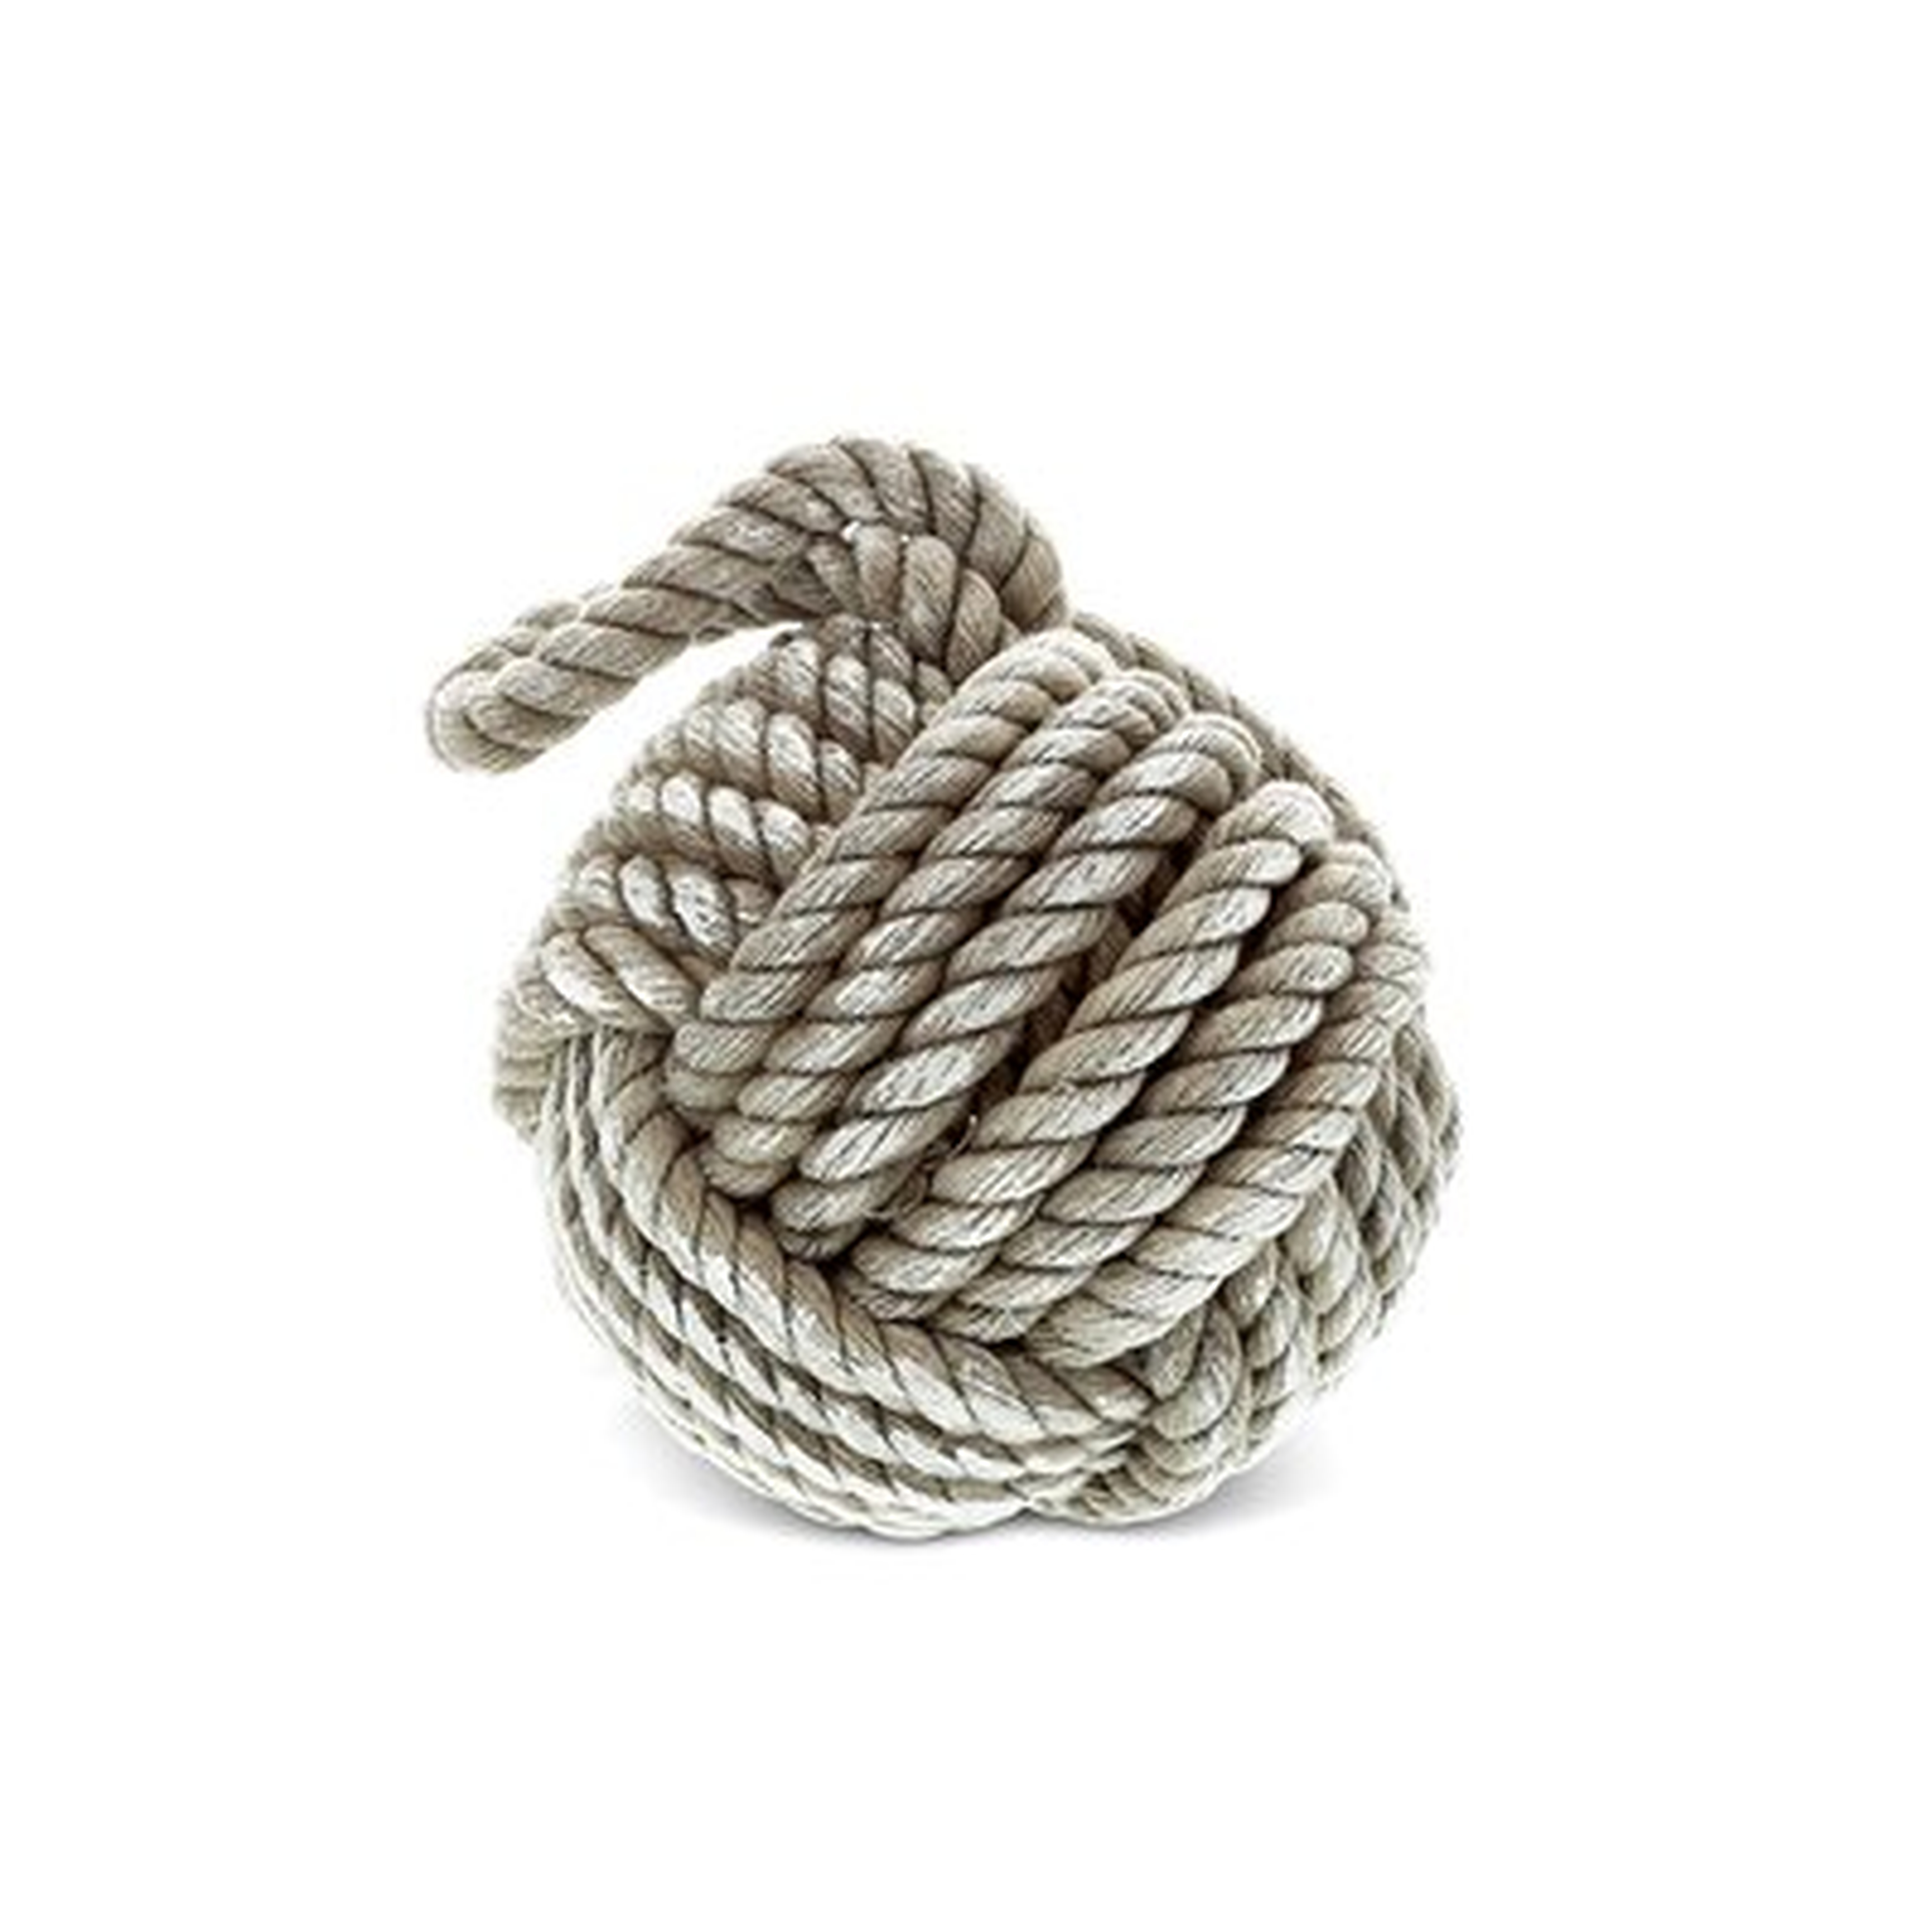 Zephyr Nautical Ornament Monkey Fist Sailor Knot Hemp Rope - Wayfair